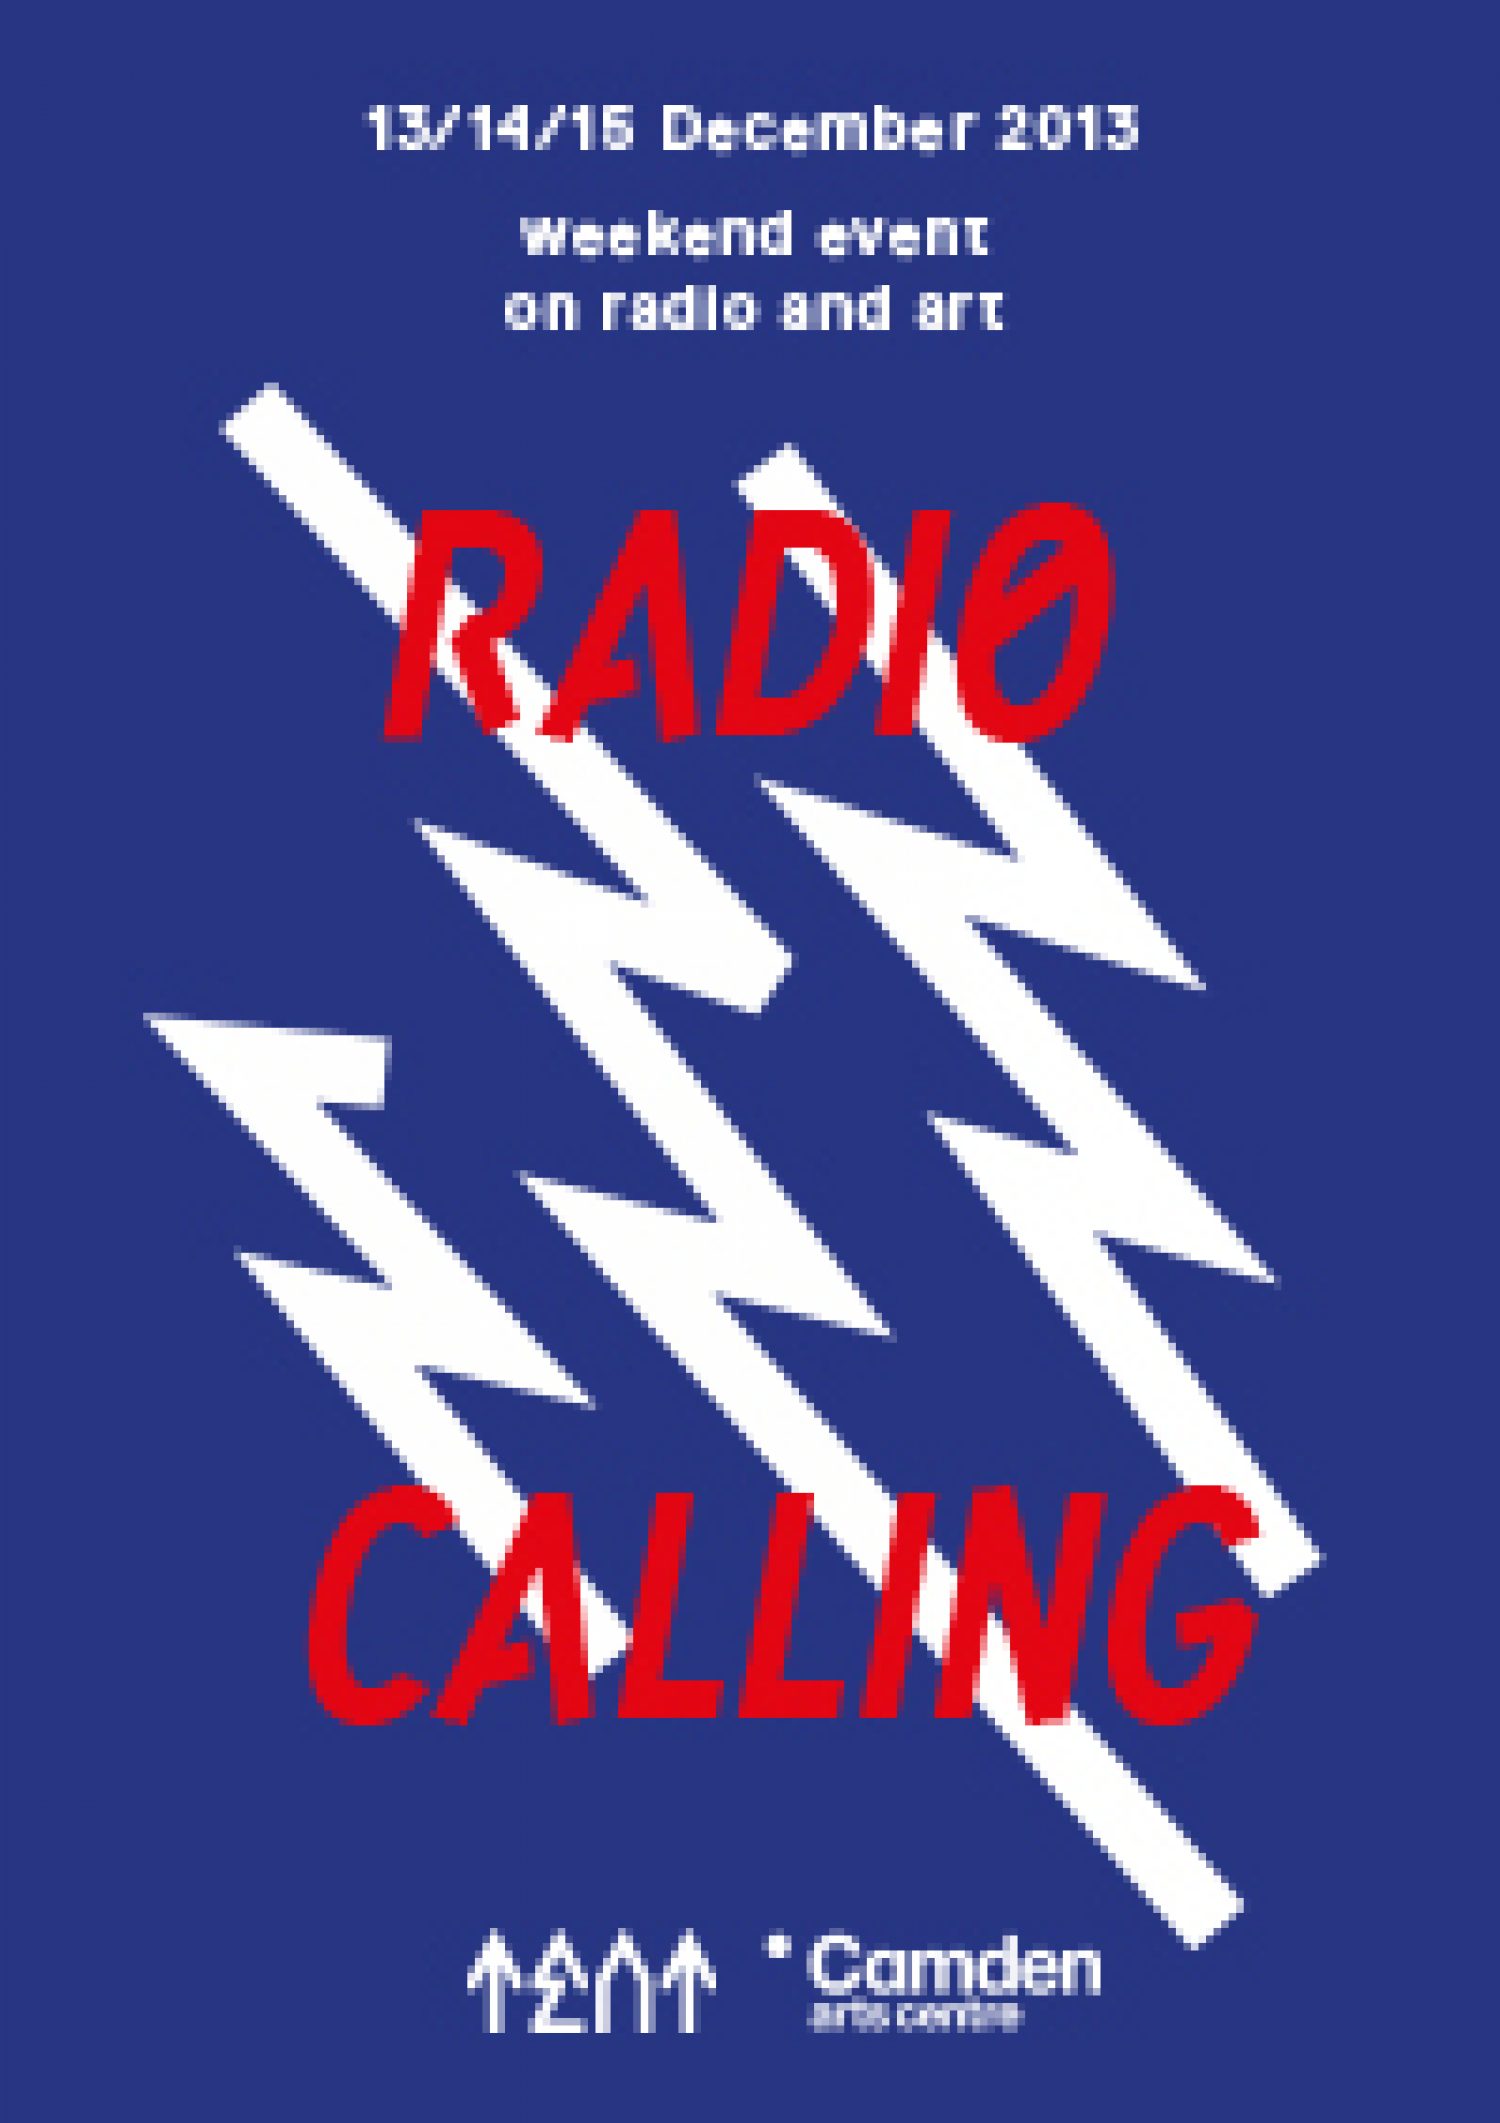 OPEN CALL for radio performances